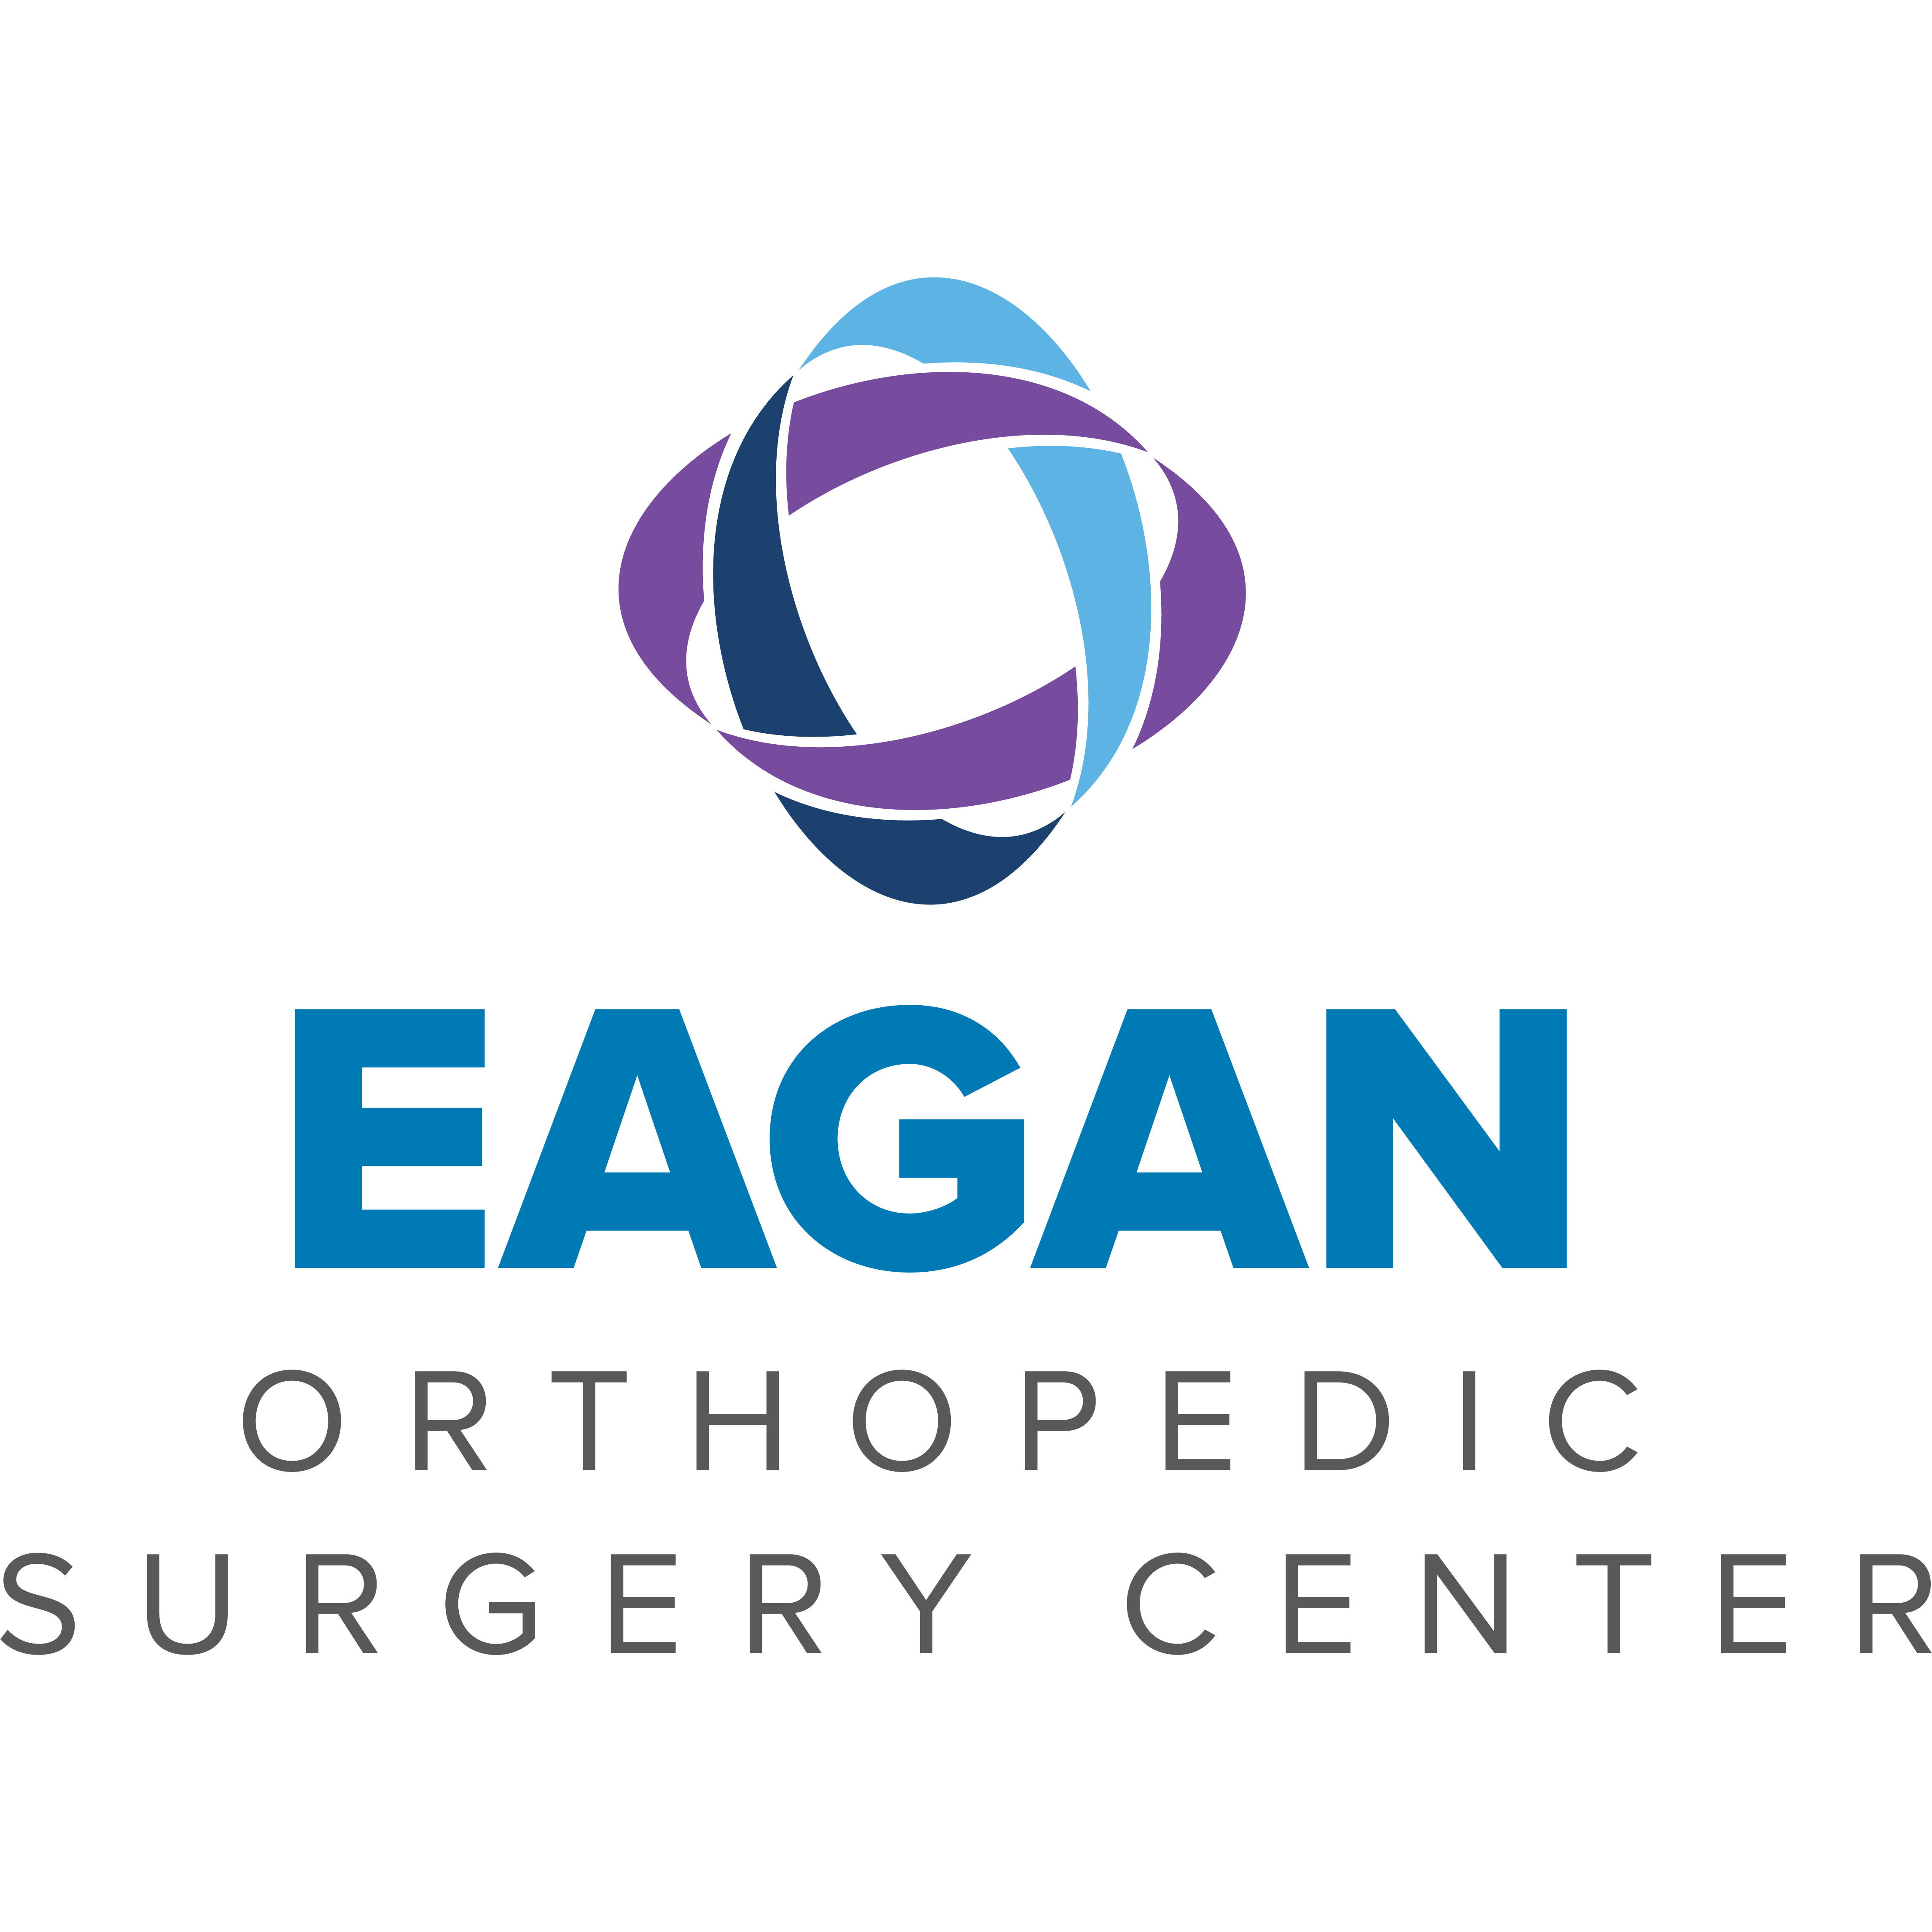 Eagan Orthopedic Surgery Center - Eagan, MN 55121 - (952)456-7100 | ShowMeLocal.com